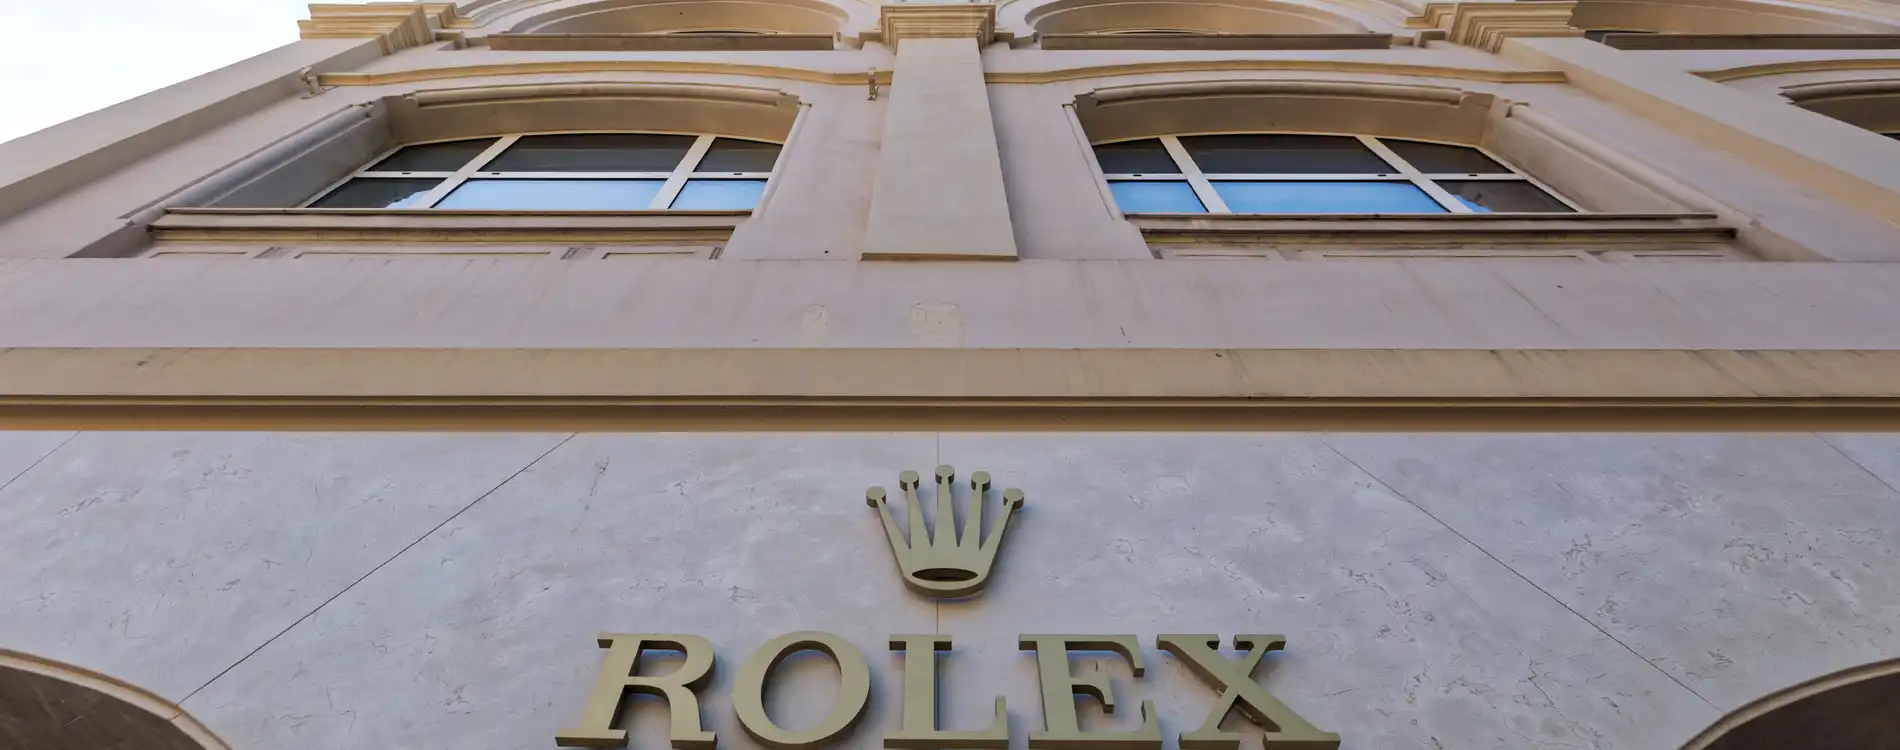 Rolex - Zegg & Cerlati in Monaco | Monte-Carlo Société des Bains de Mer